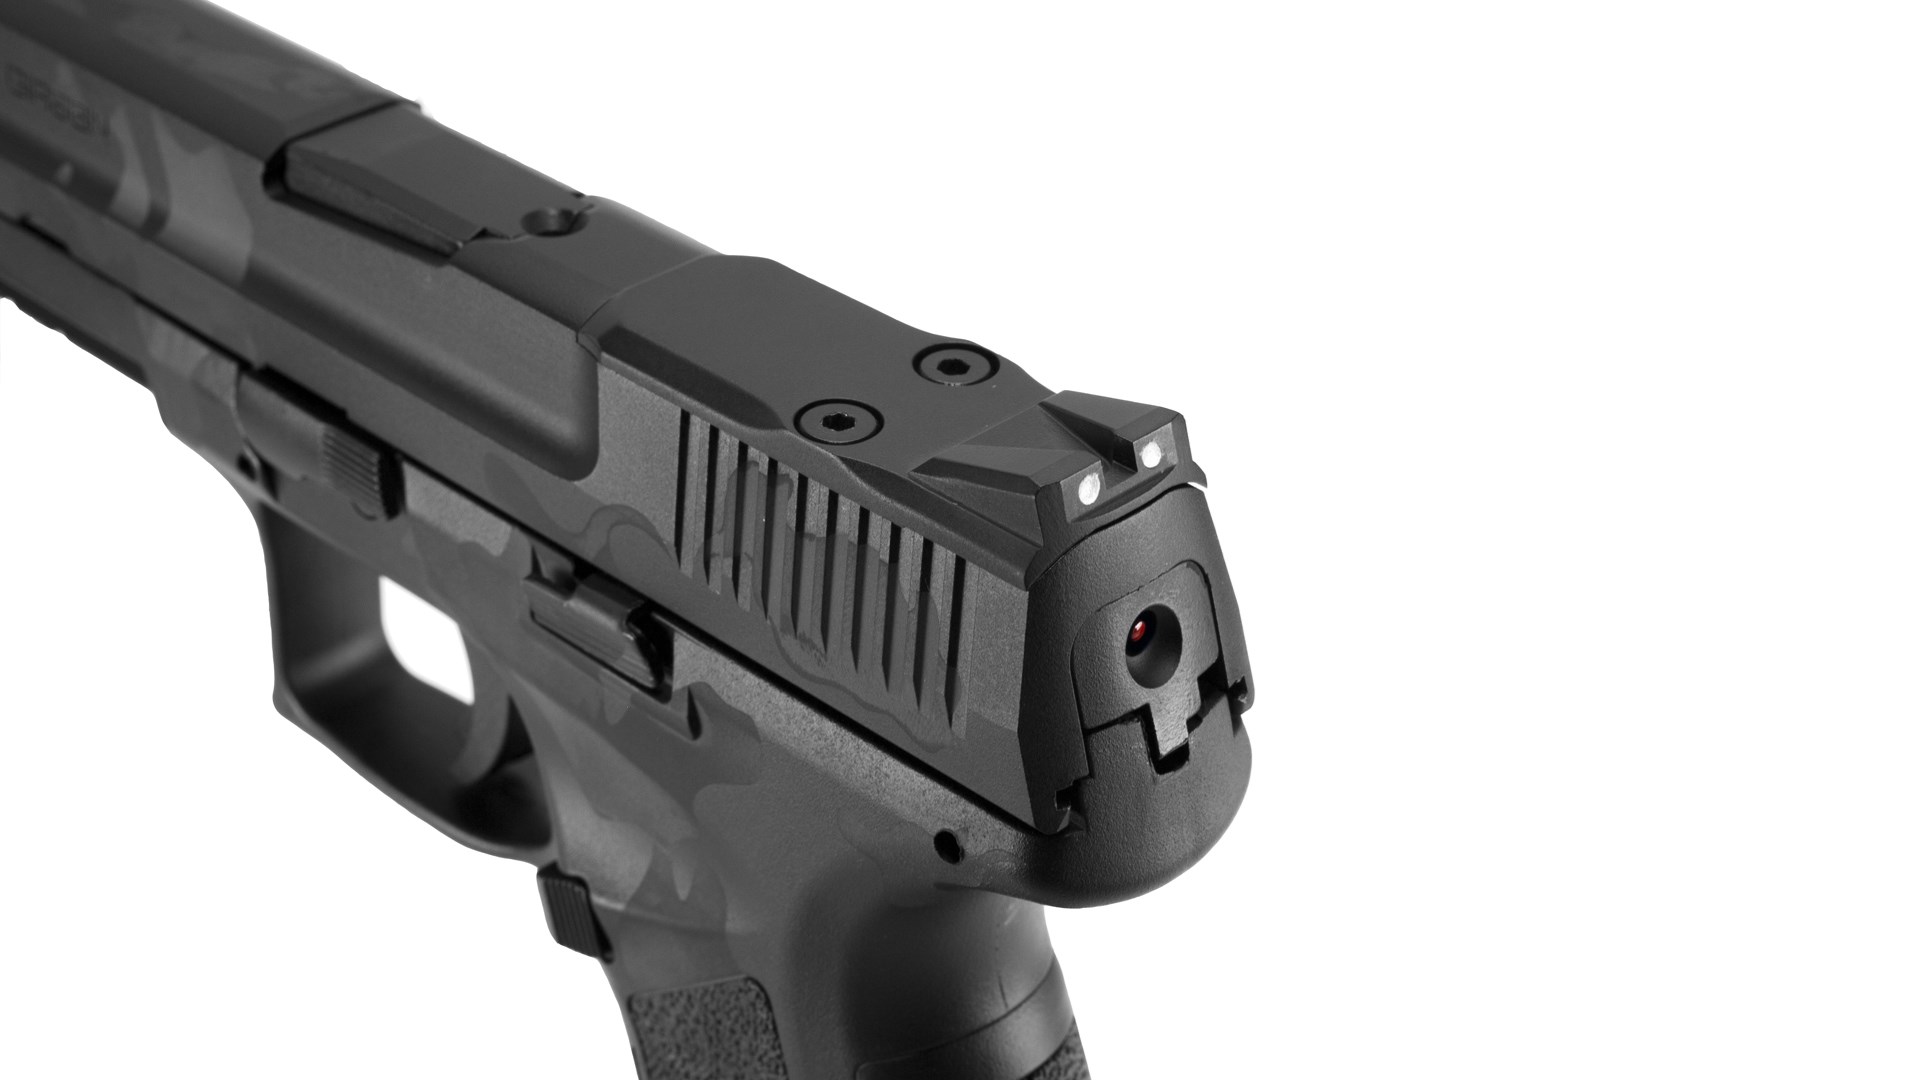 Rear sight of the black EAA Girsan MC9 Disruptor pistol.